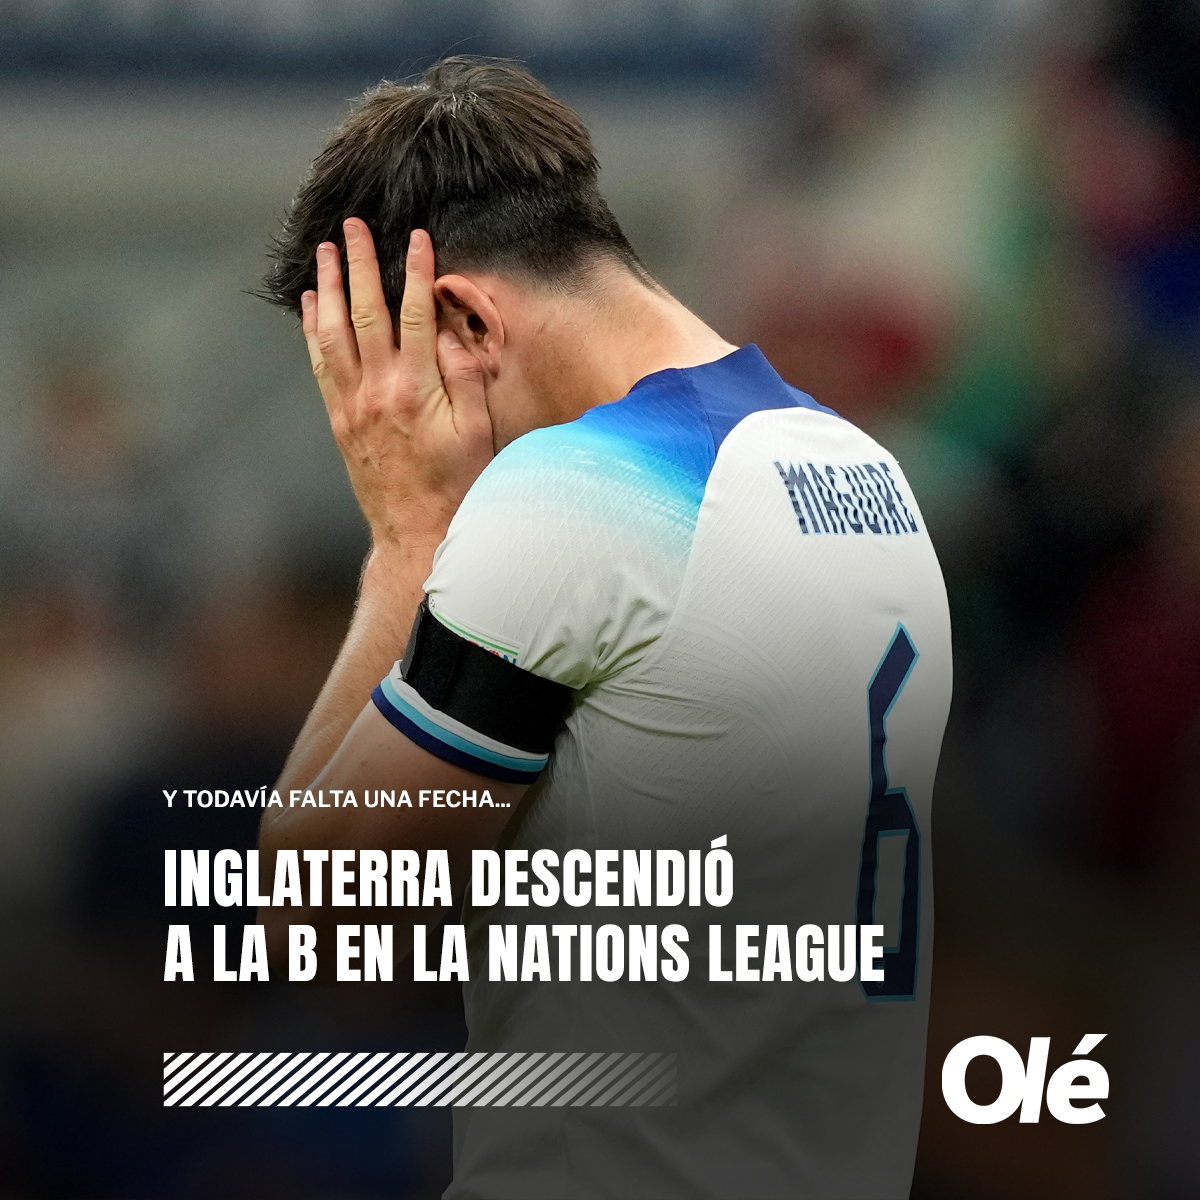 @DiarioOle's photo on Nations League